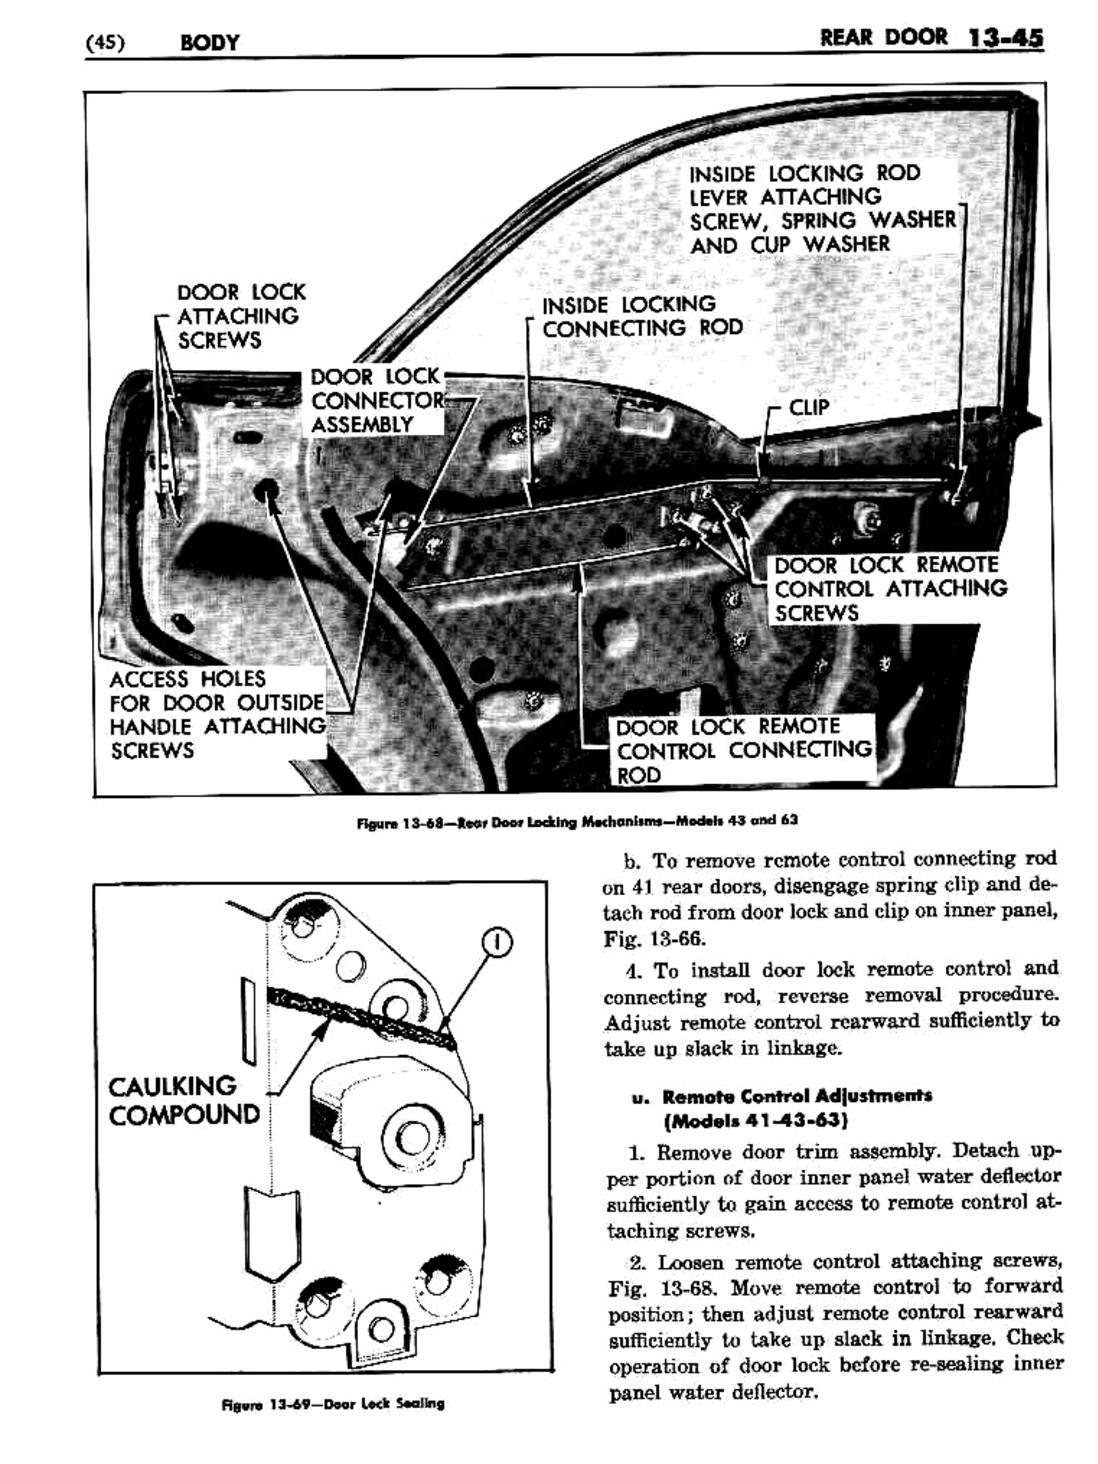 n_1957 Buick Body Service Manual-047-047.jpg